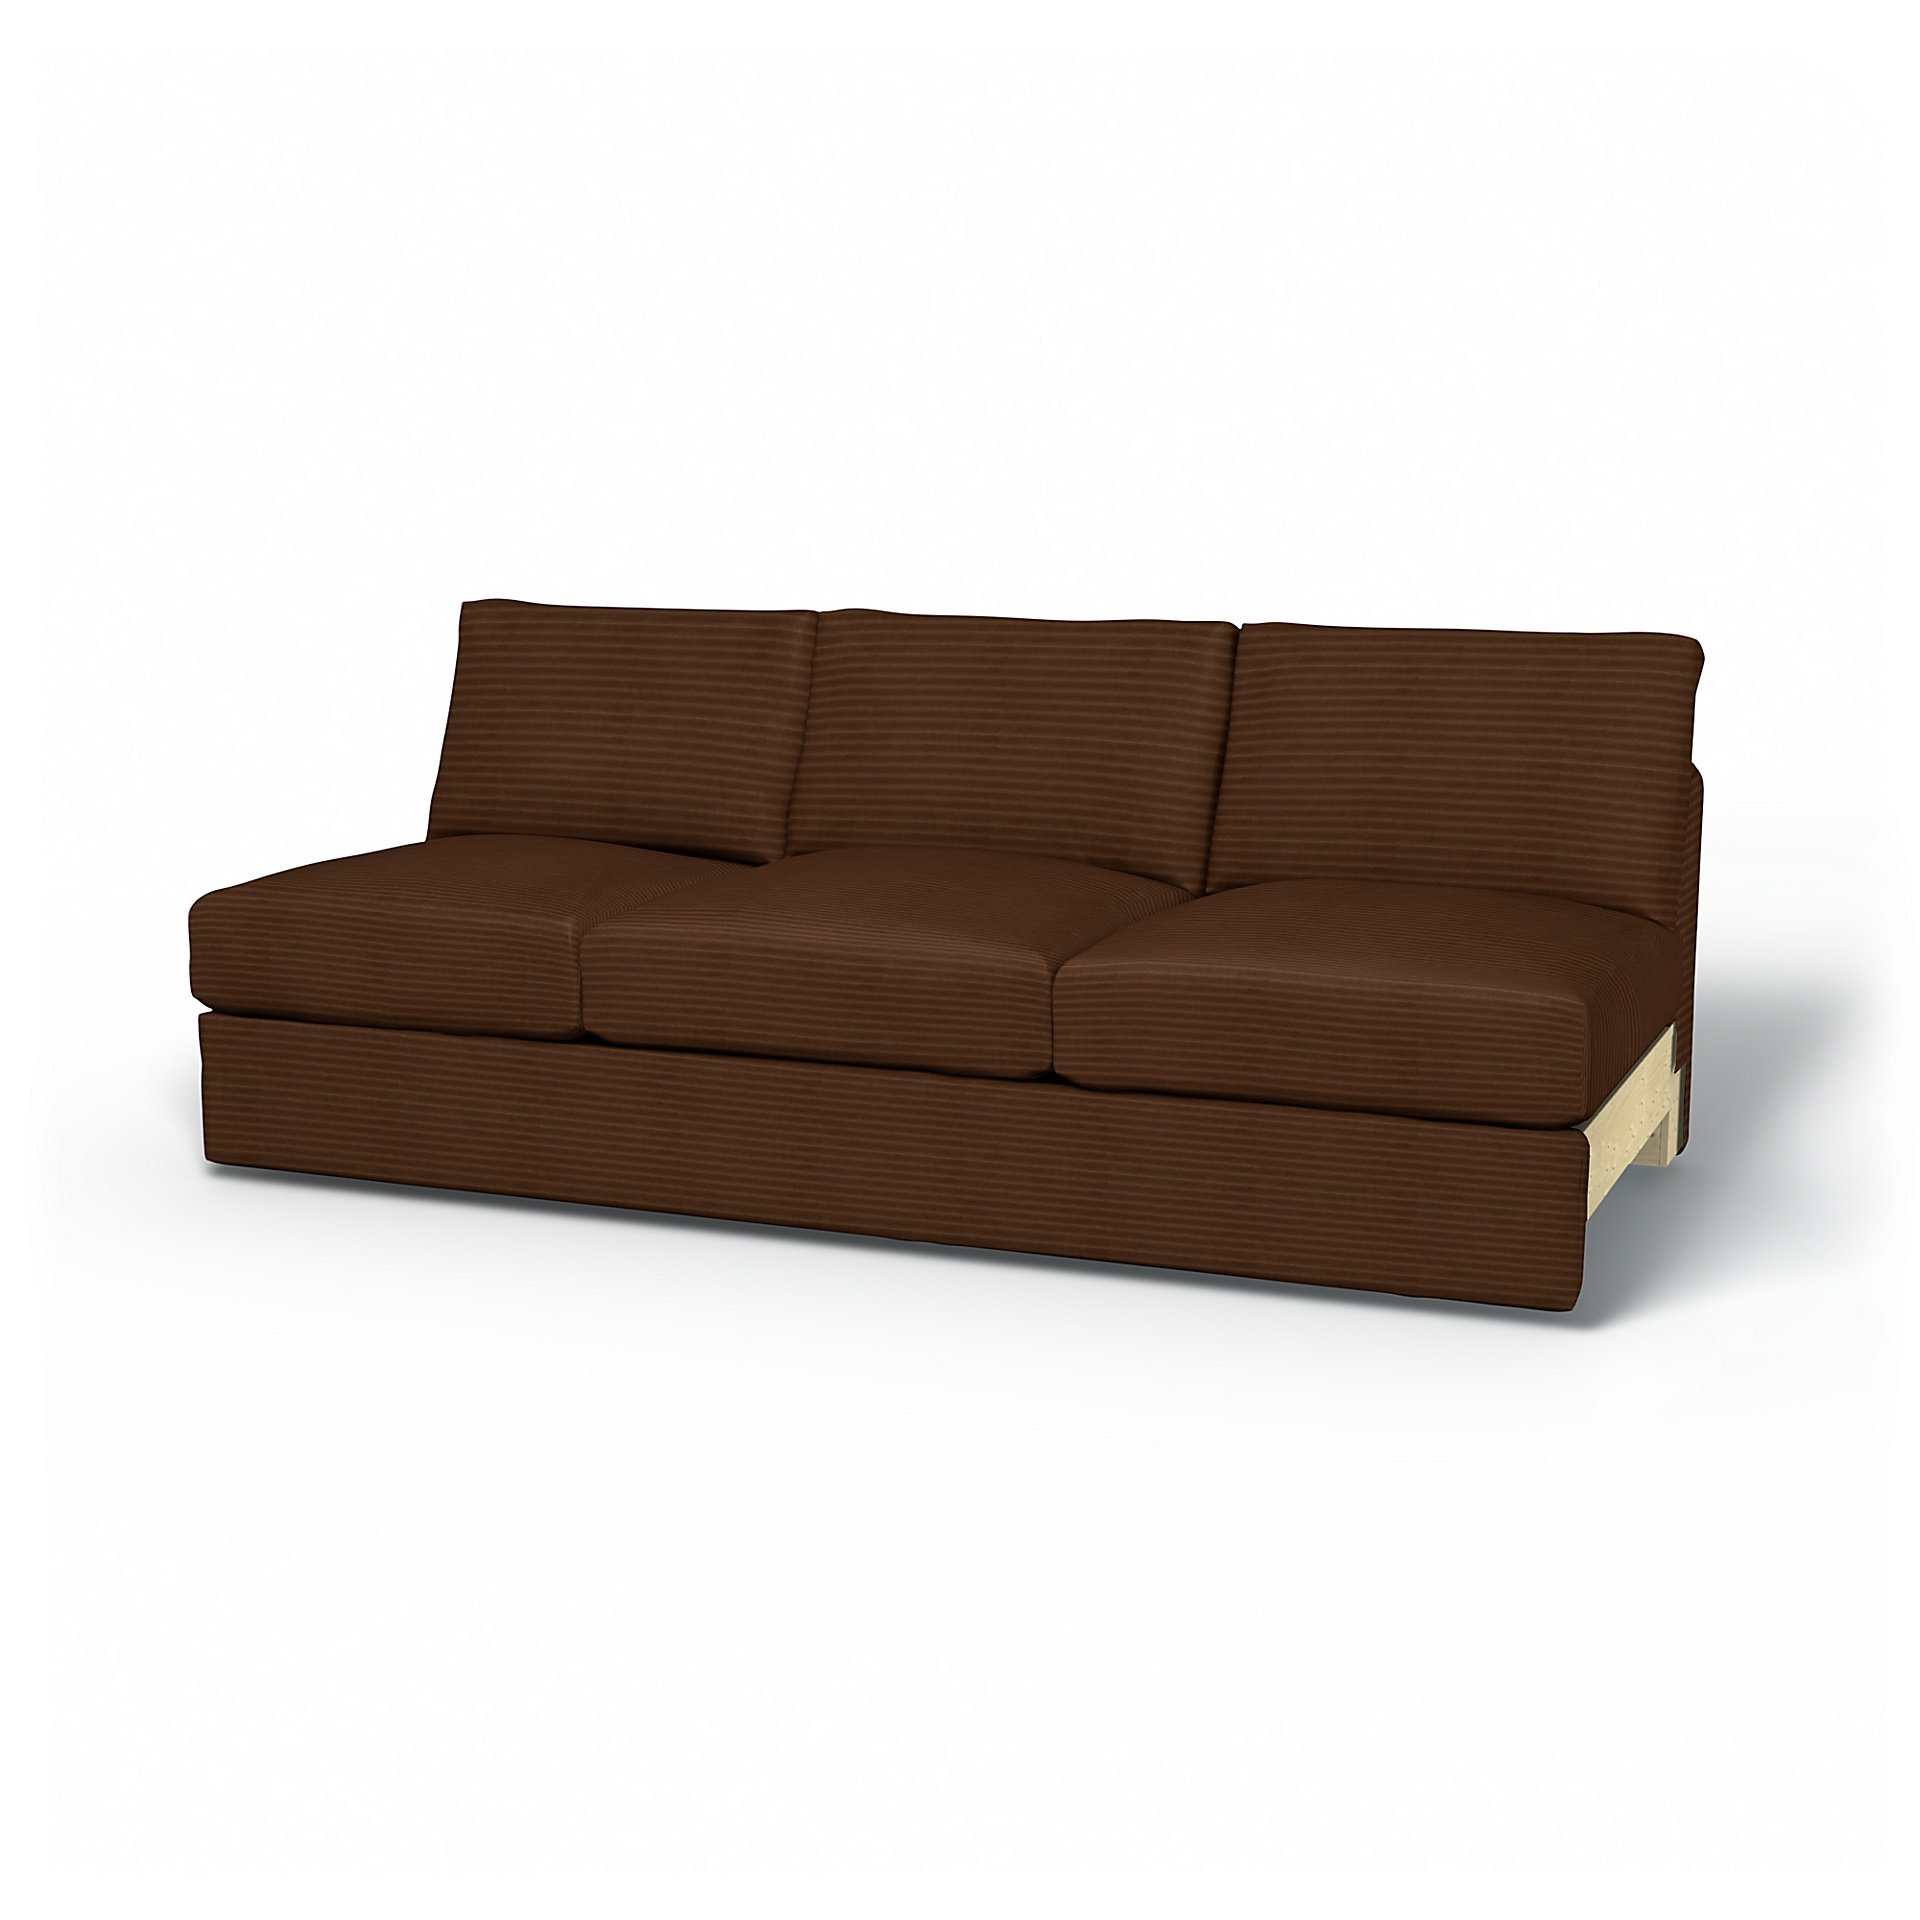 IKEA - Vimle 3 Seat Section Cover, Chocolate Brown, Corduroy - Bemz